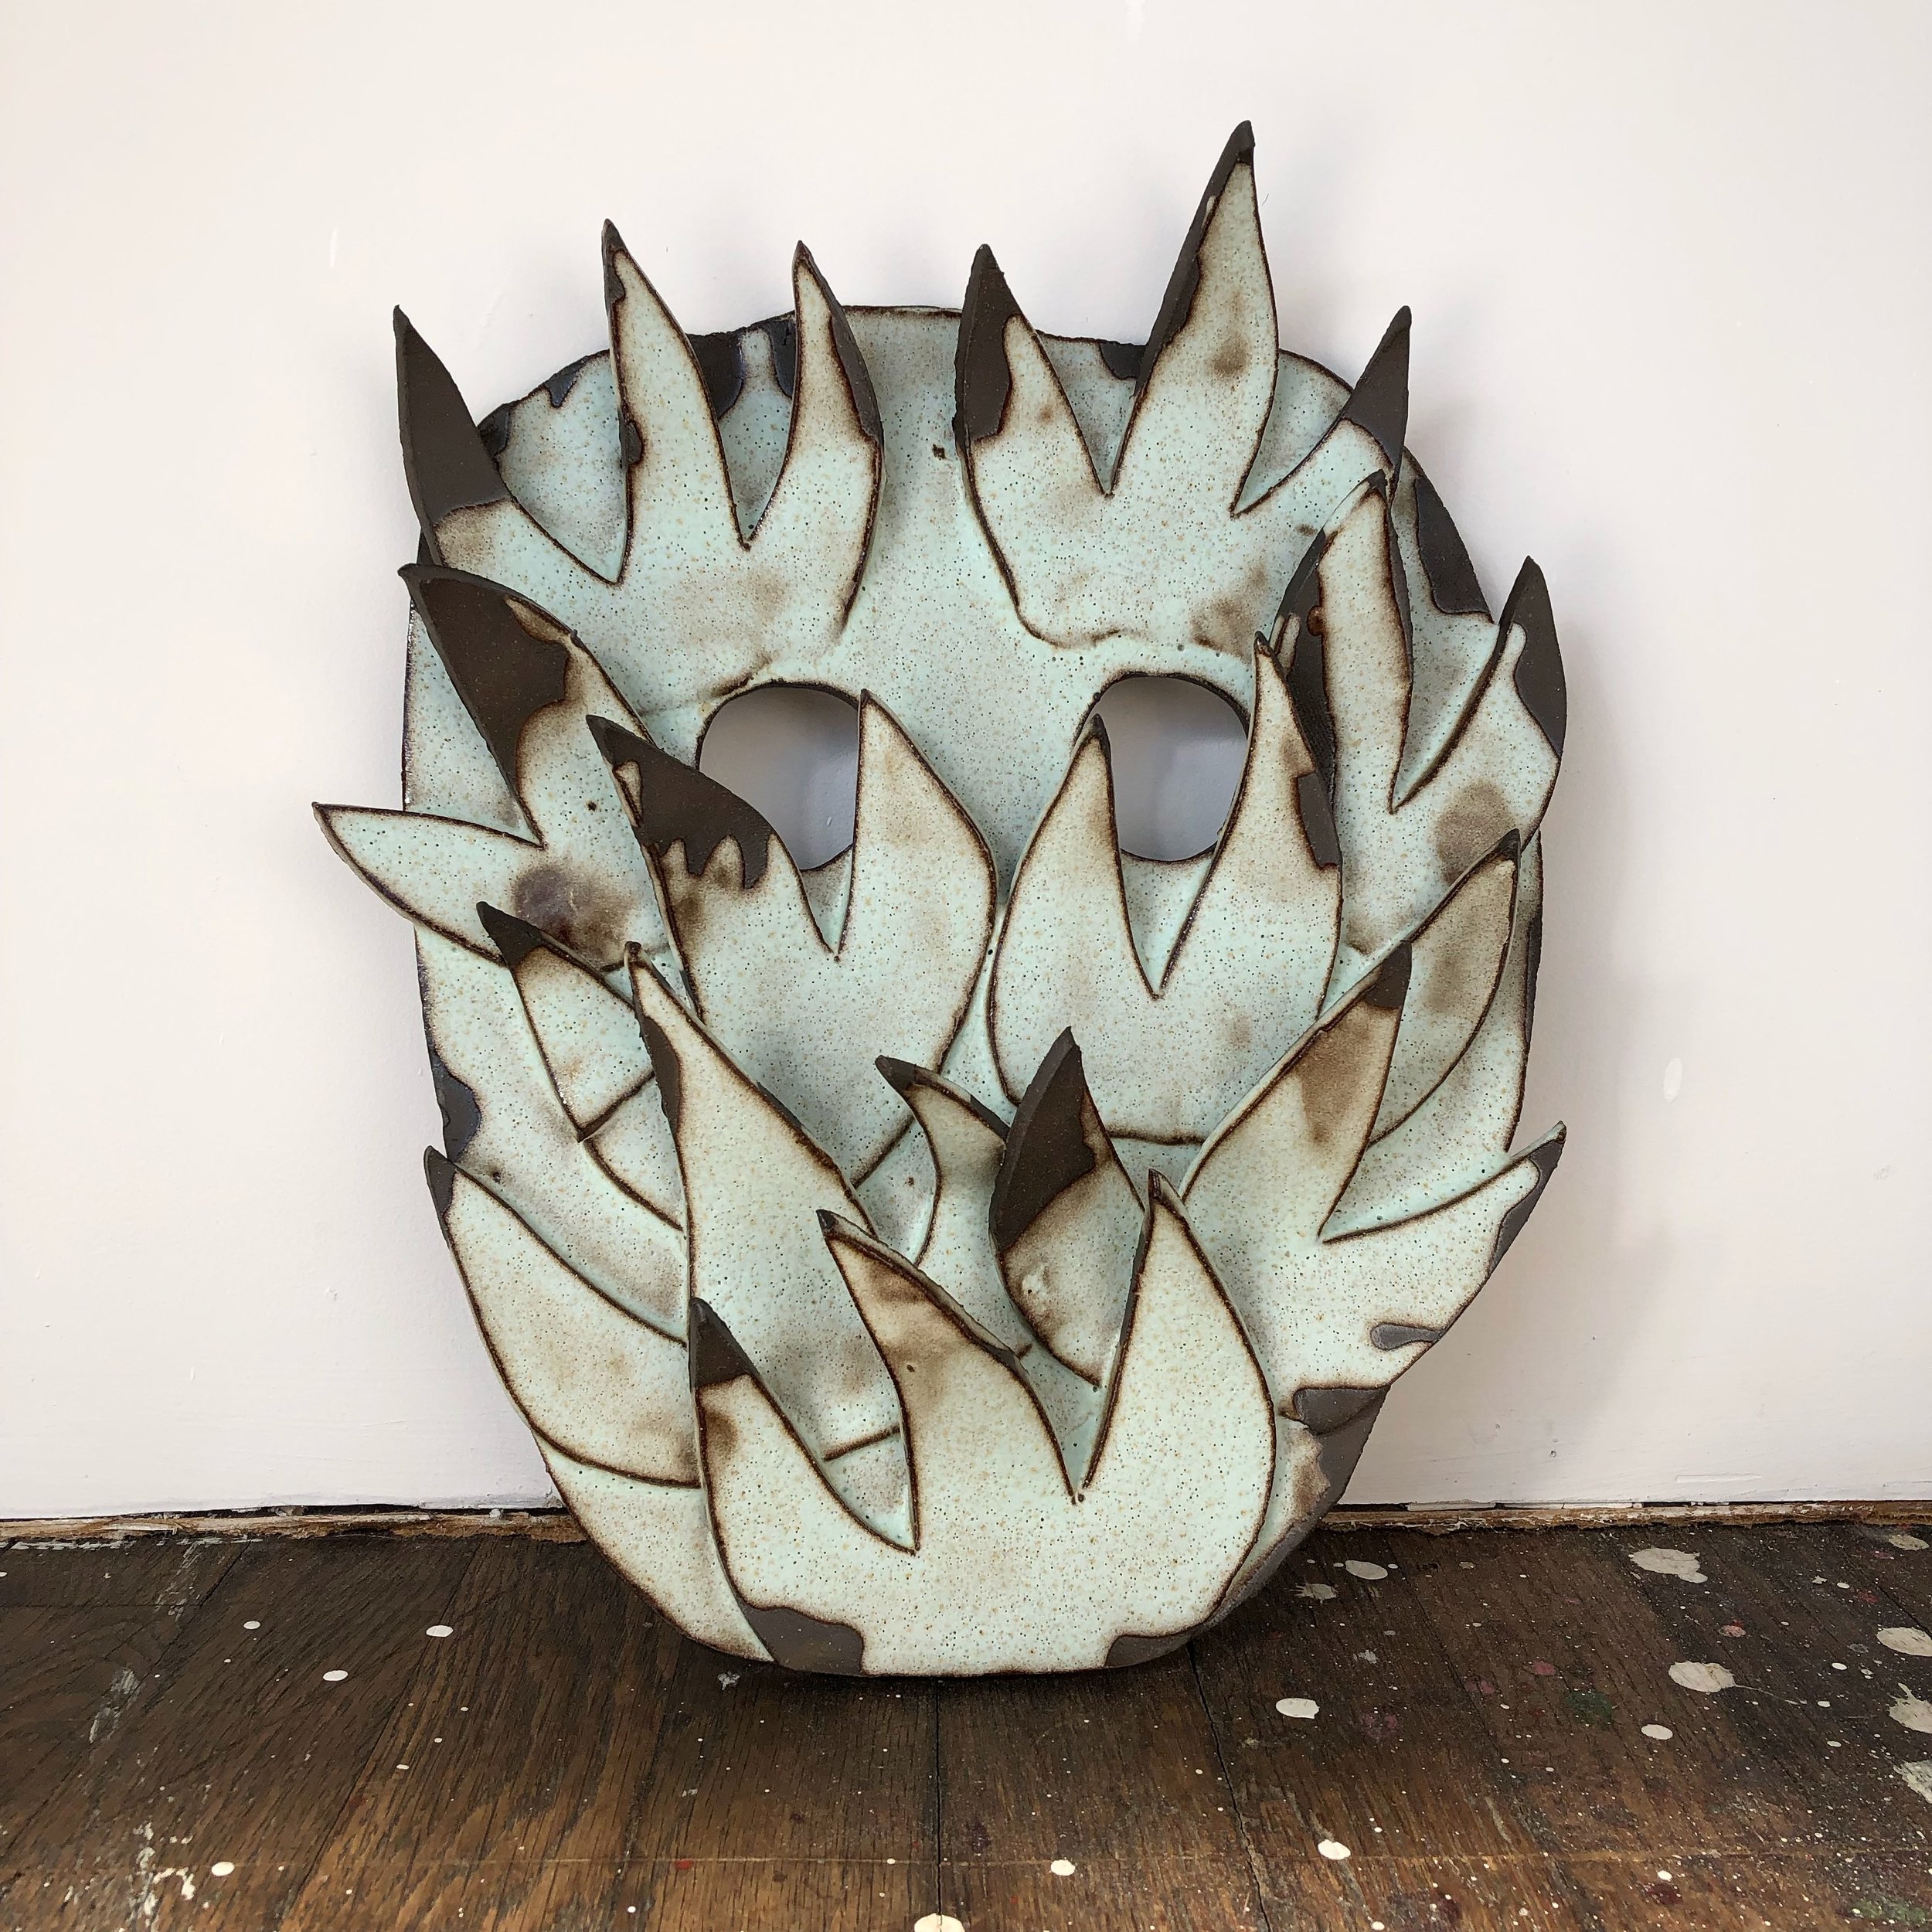 Puck, 2019, glazed ceramic, 10 x 9 x 2 inches